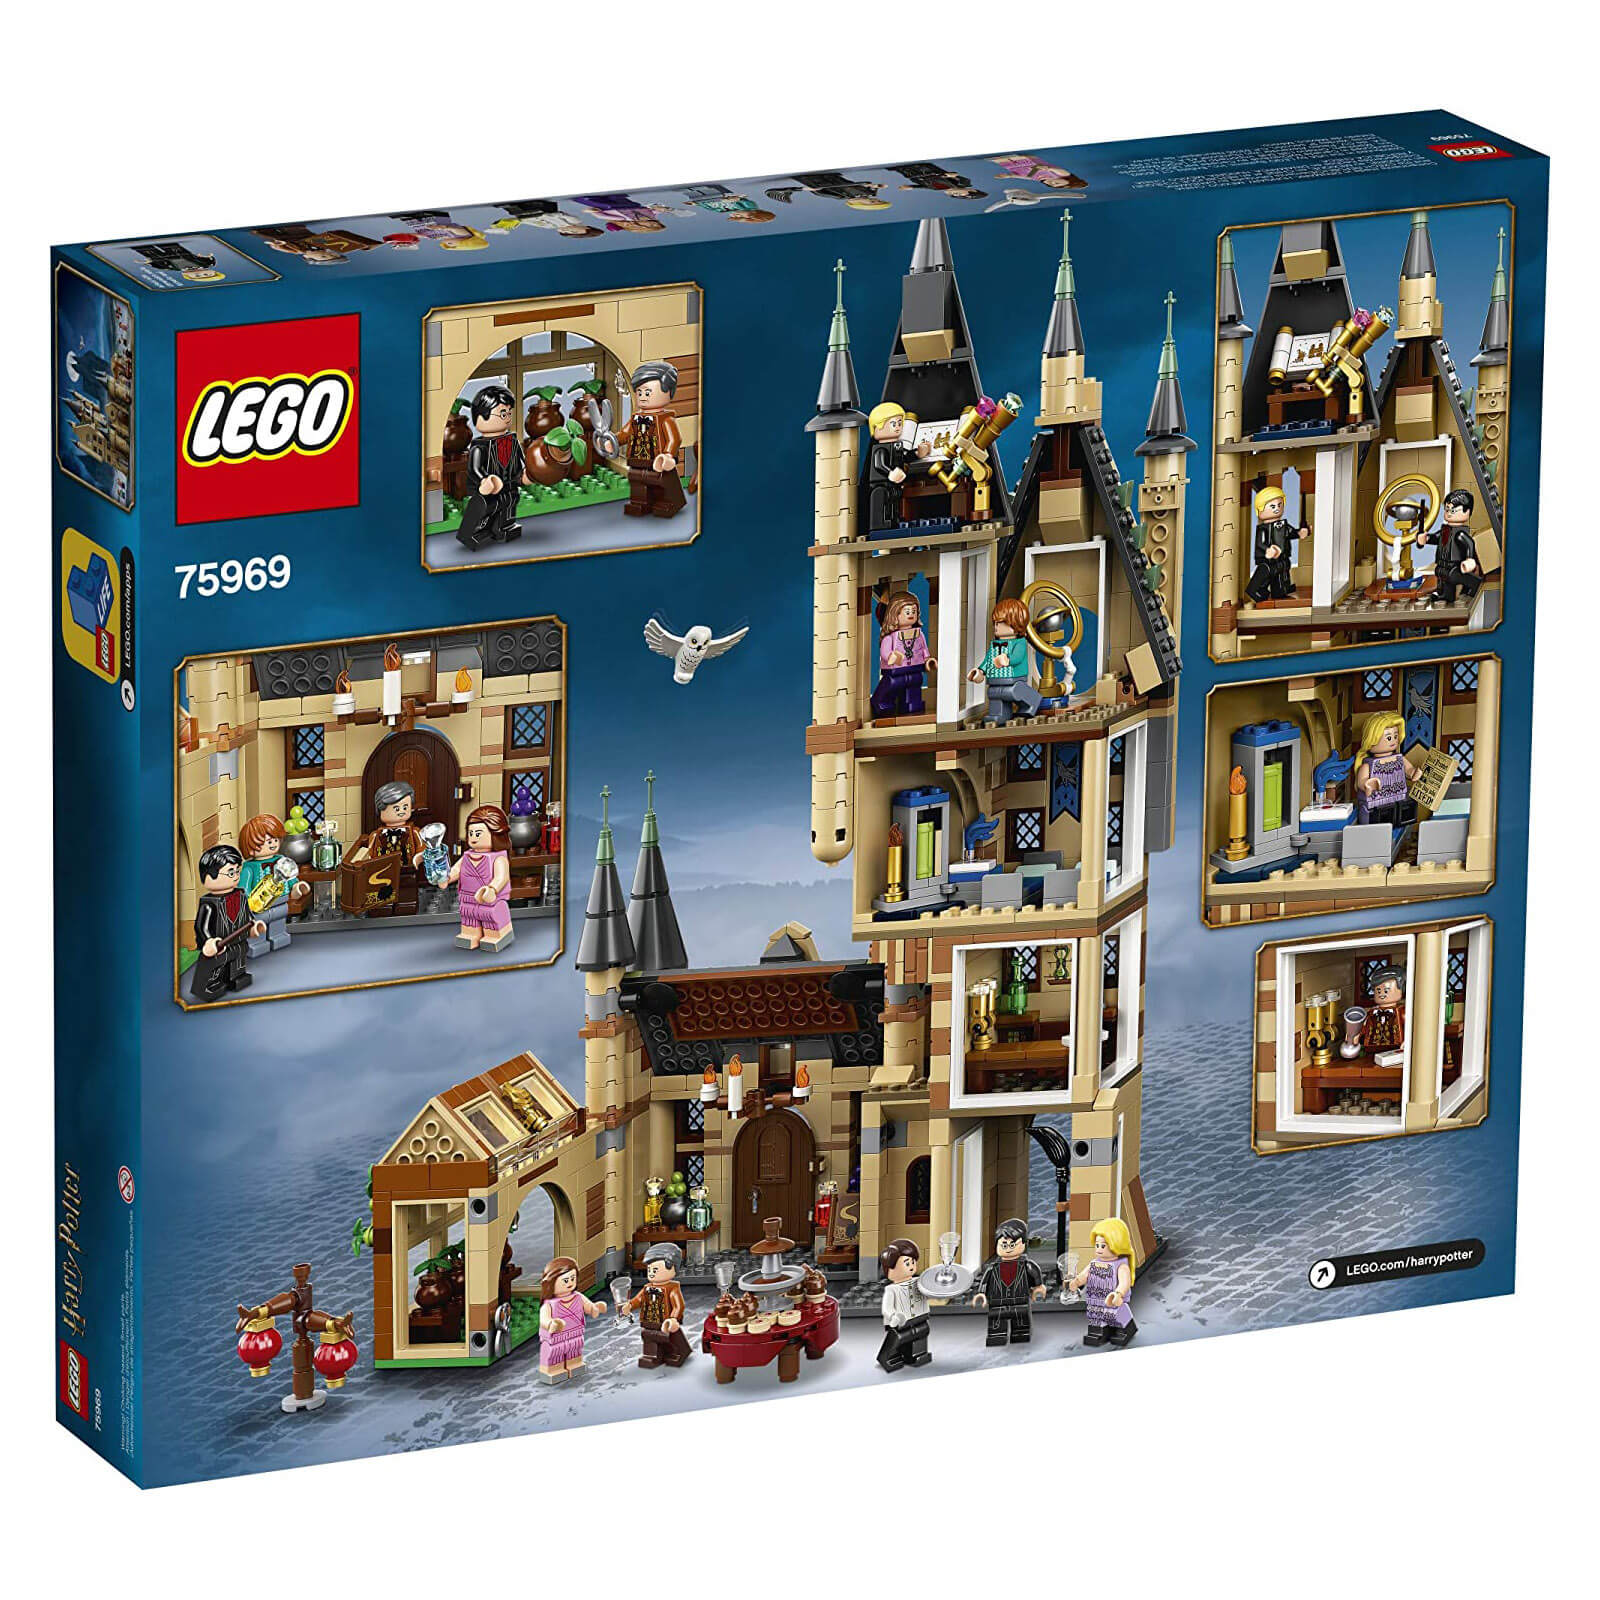 LEGO Harry Potter Hogwarts Astronomy Tower 971 Piece Building Set (75969)